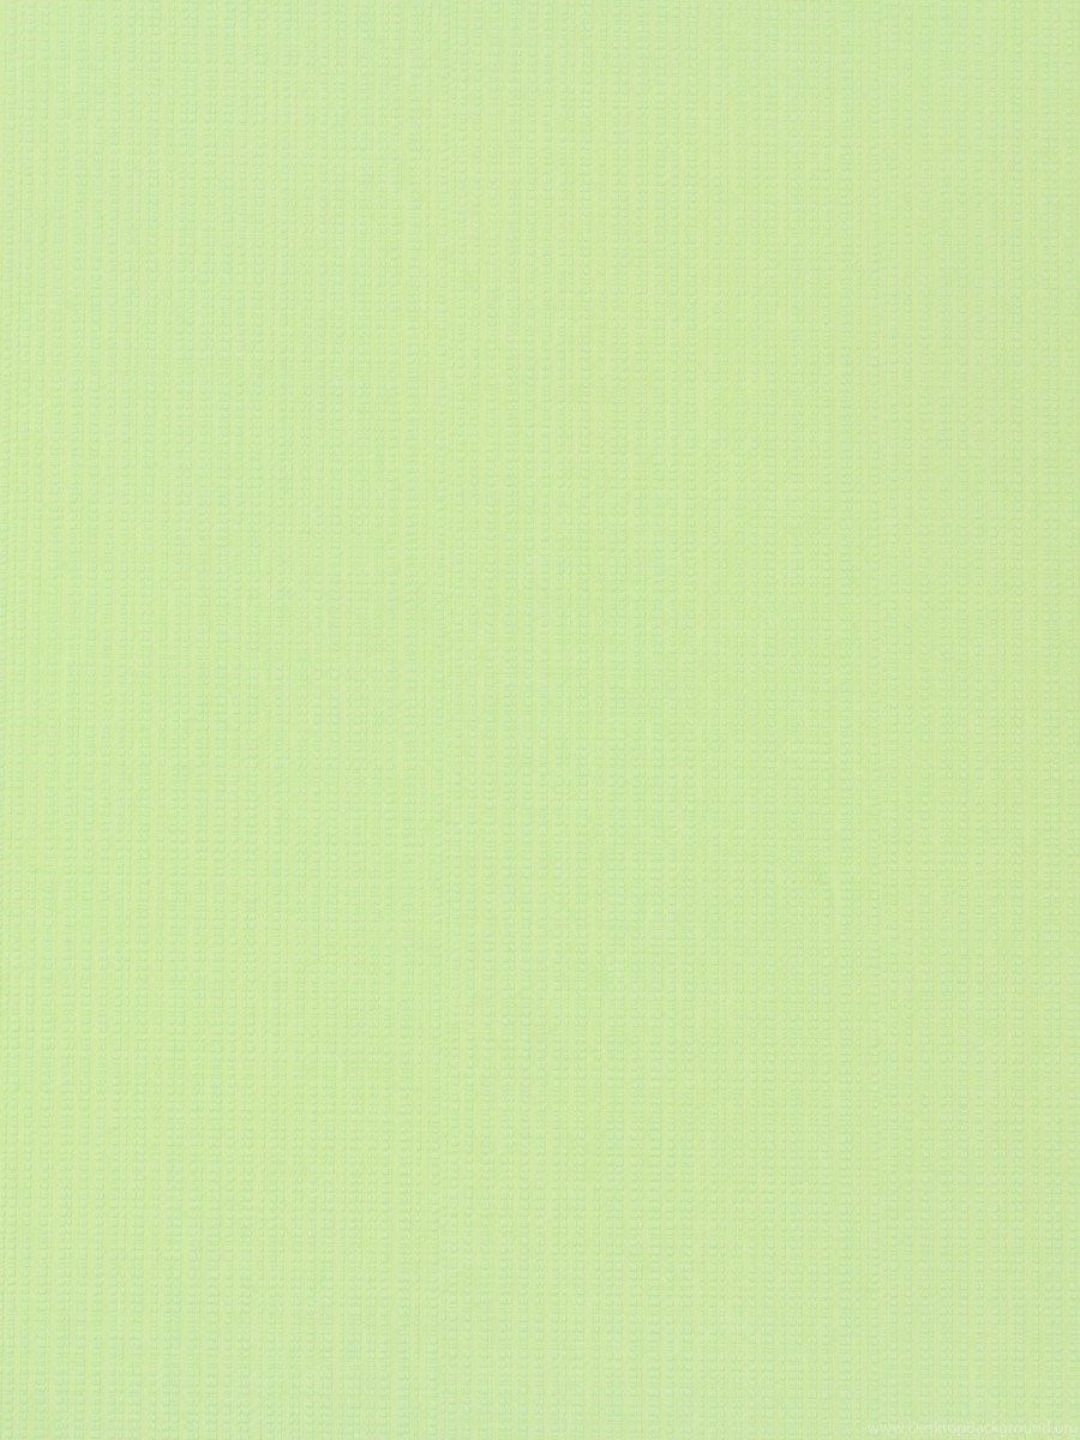 Green Pastel Wallpapers - Wallpaper Cave